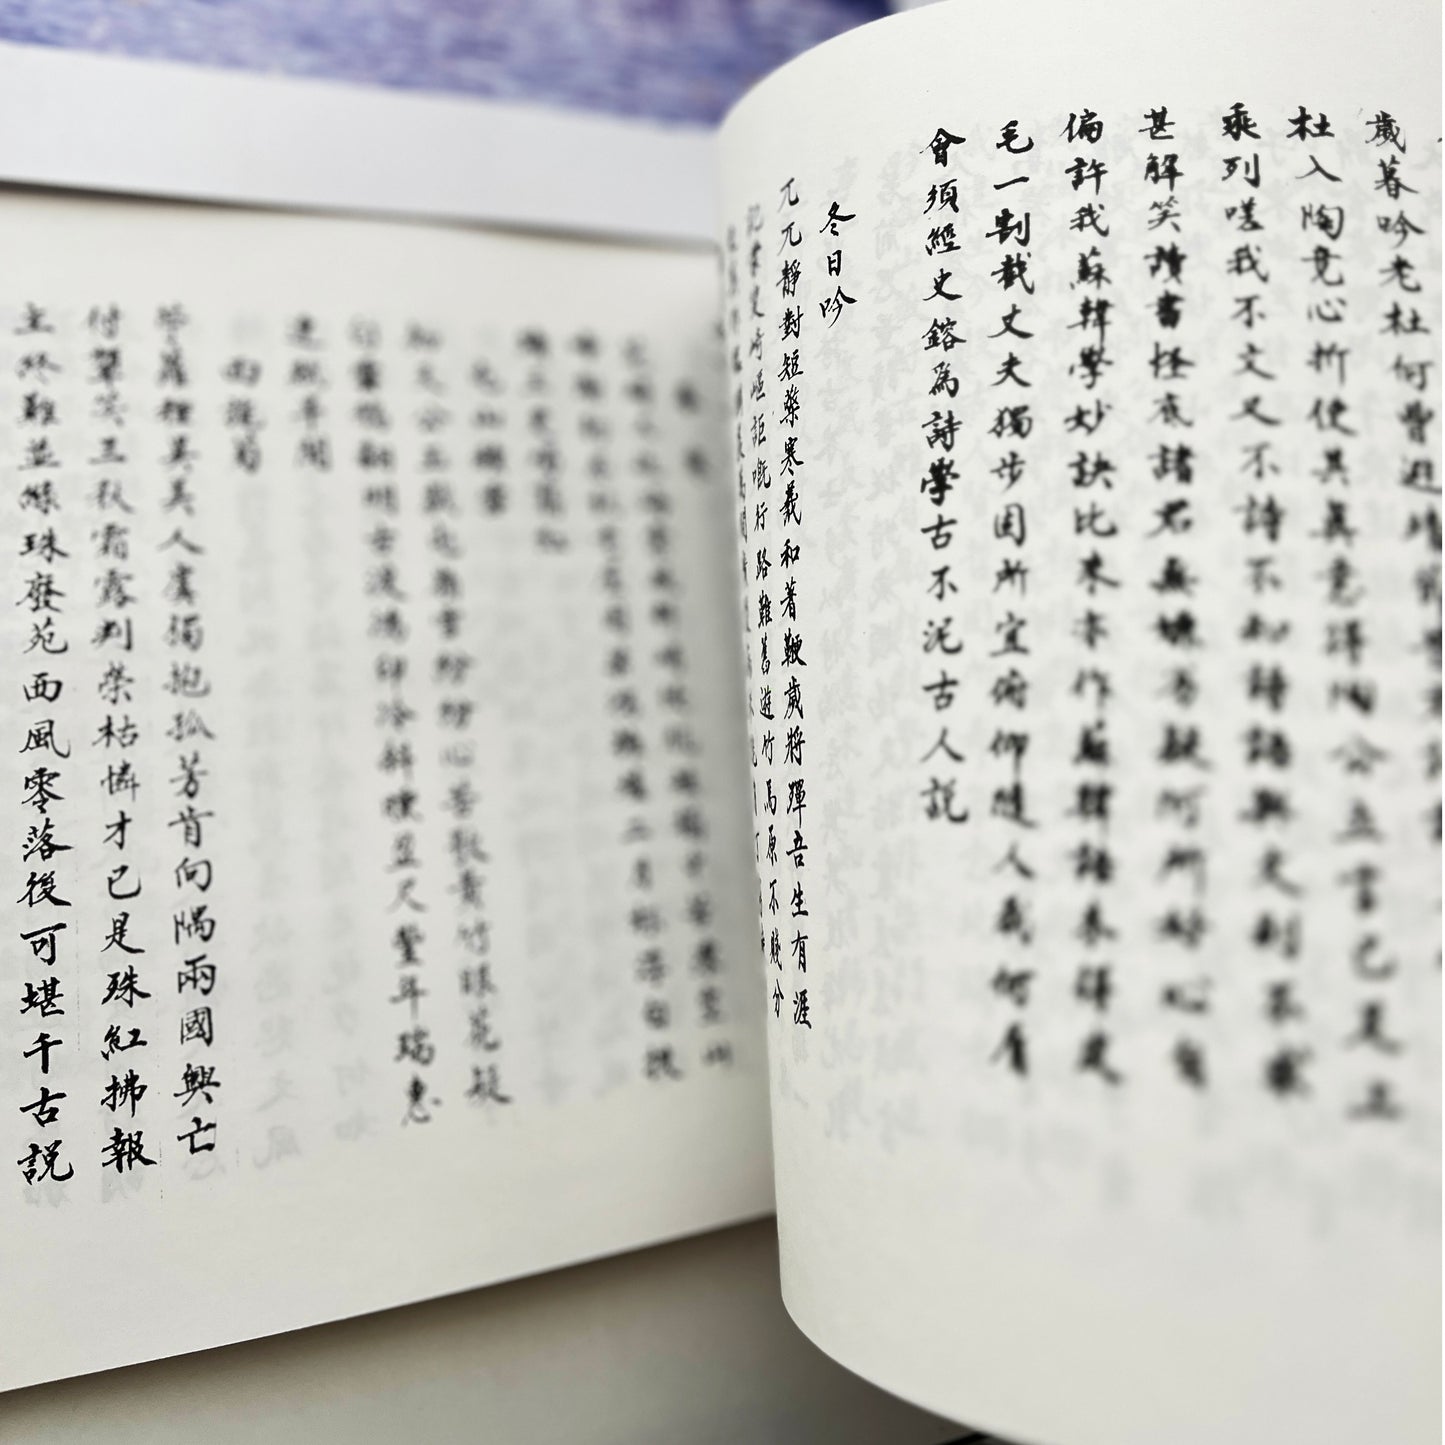 Book - Odes of Yang Shan